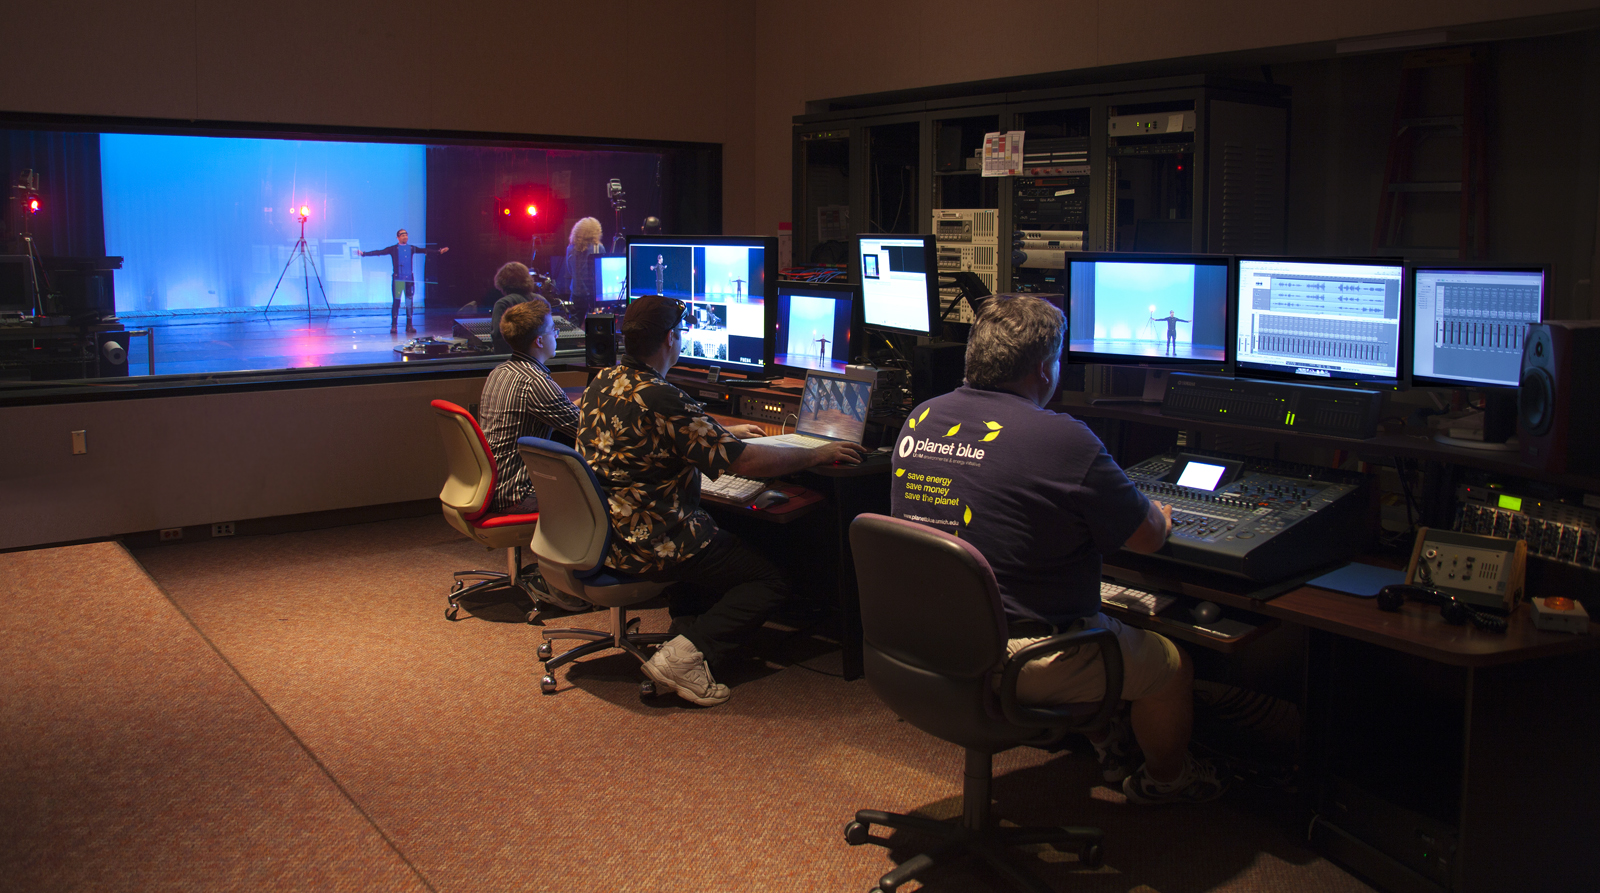 The Control Room U of Michigan Video Studio Full HD Video live mixing & recording.